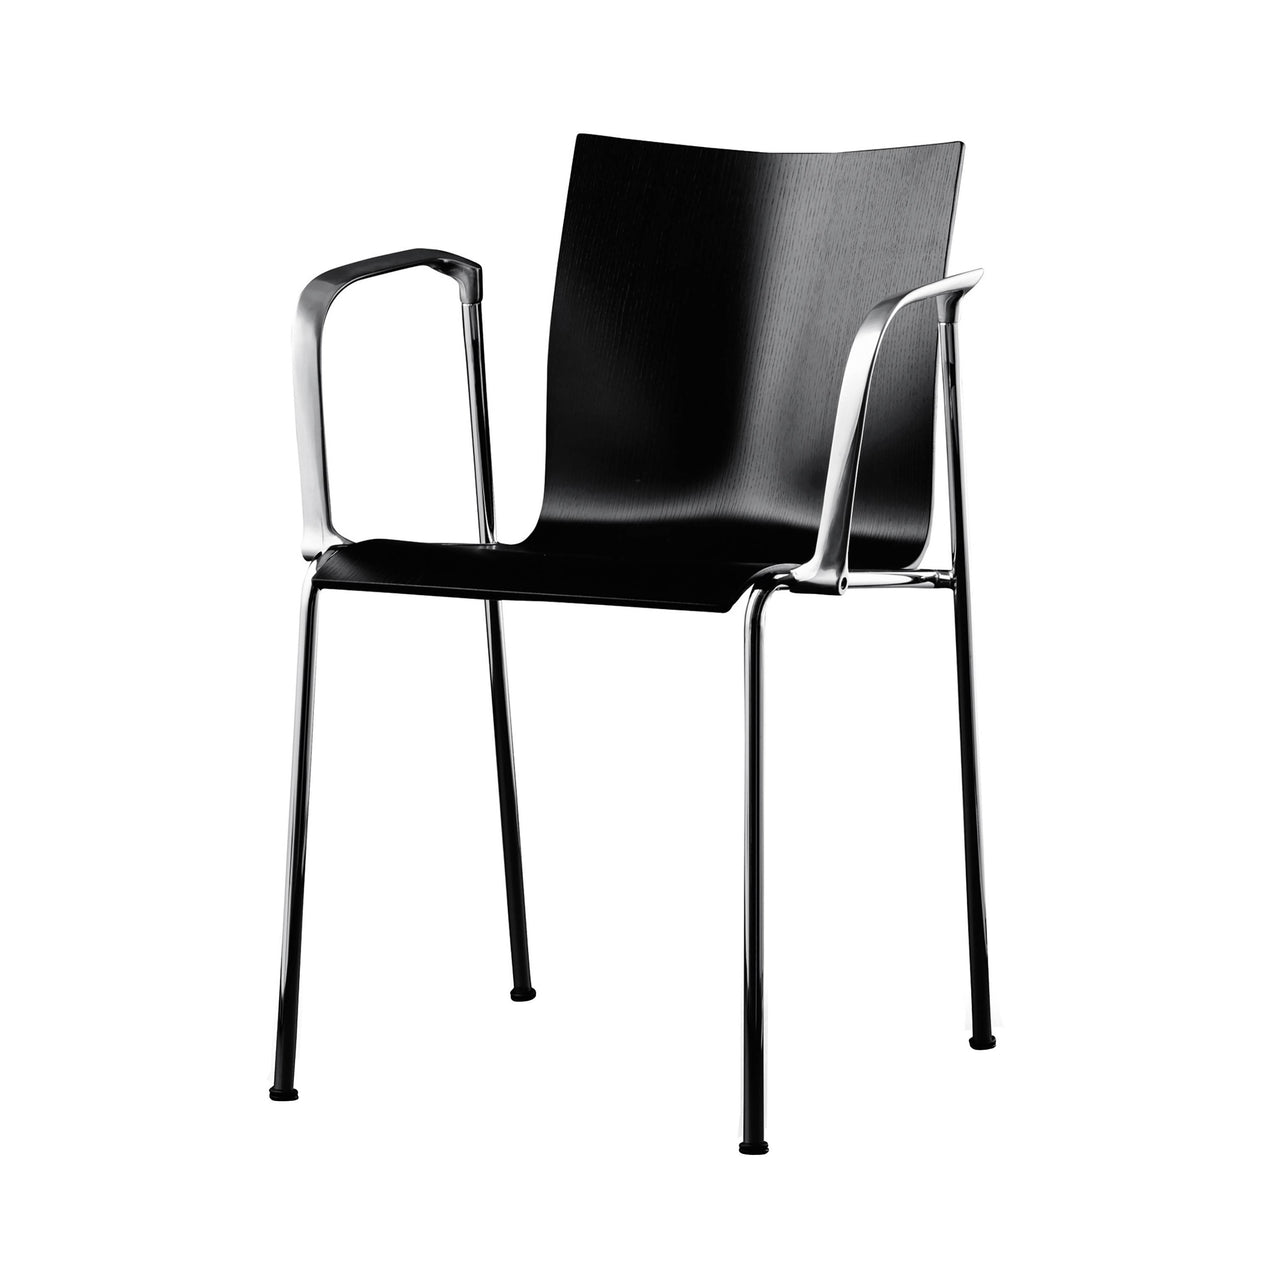 Chairik 109 Armchair: 4 Legs + Stacking + Melamine - Black